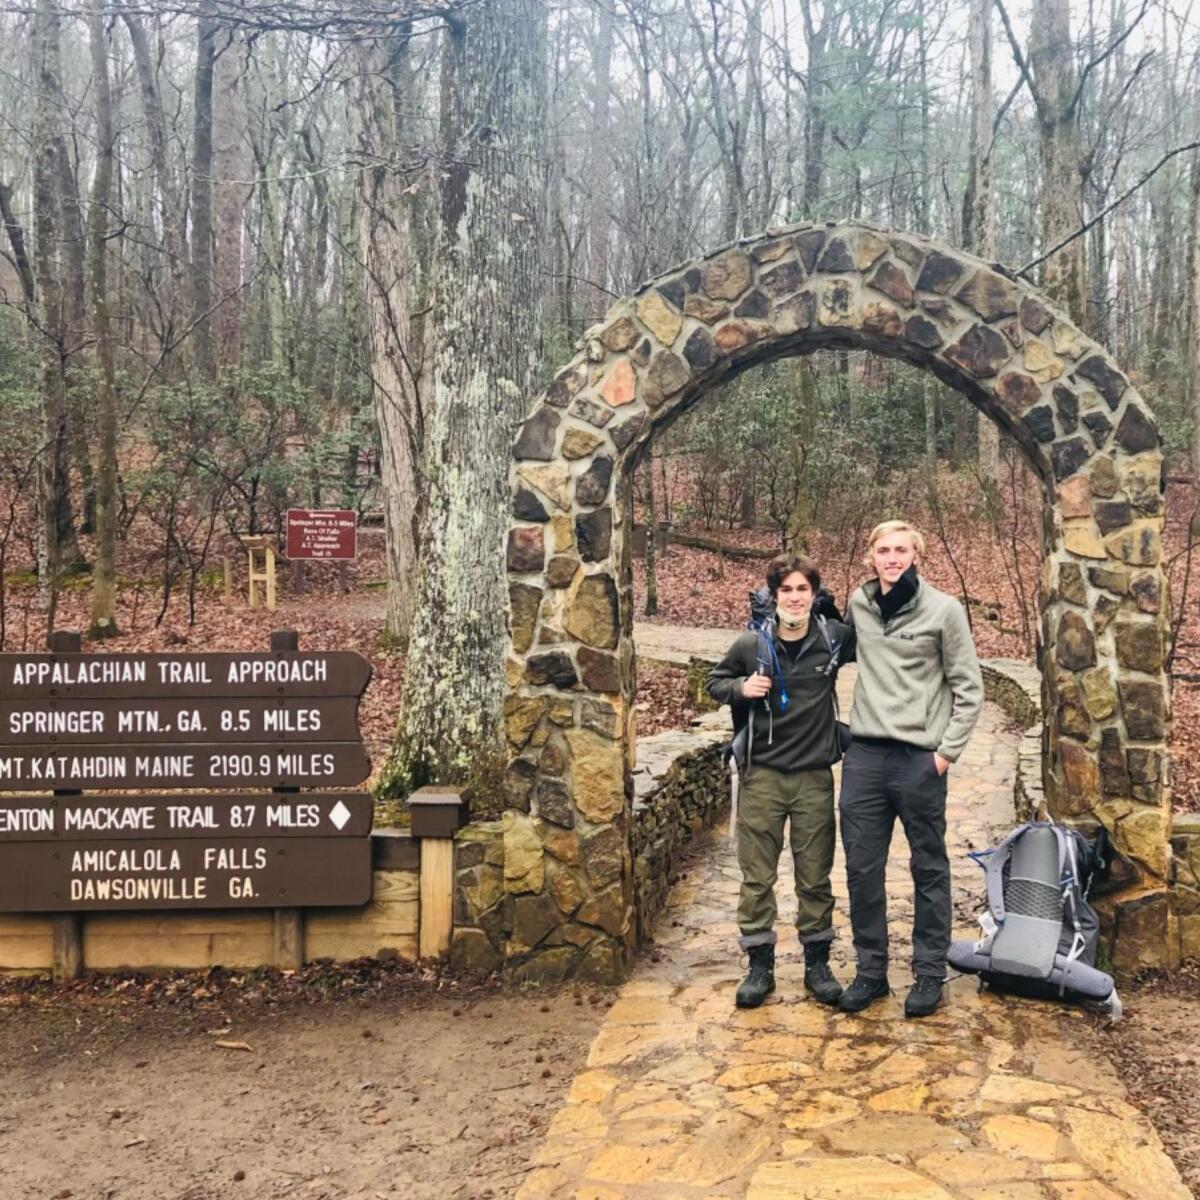 Sammy Potter, 21, and Jackson Parell, 20, began the Appalachian Trail.